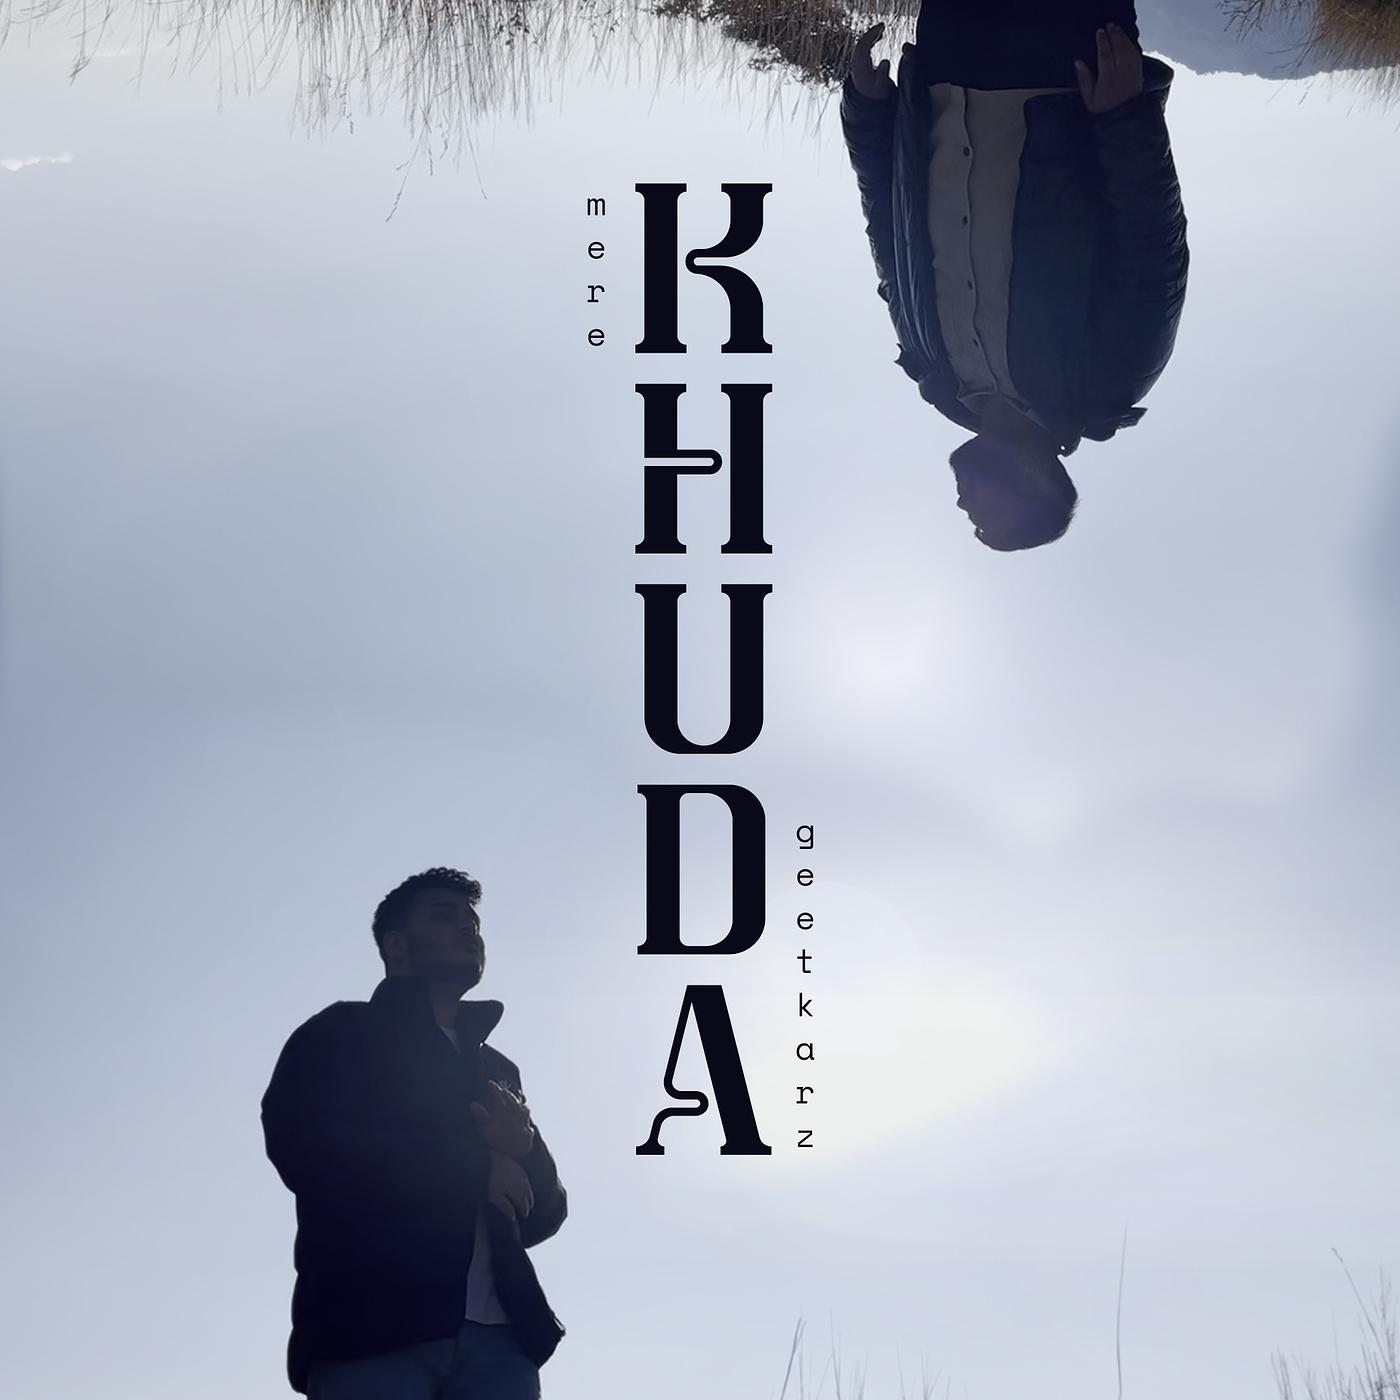 Постер альбома Mere Khuda